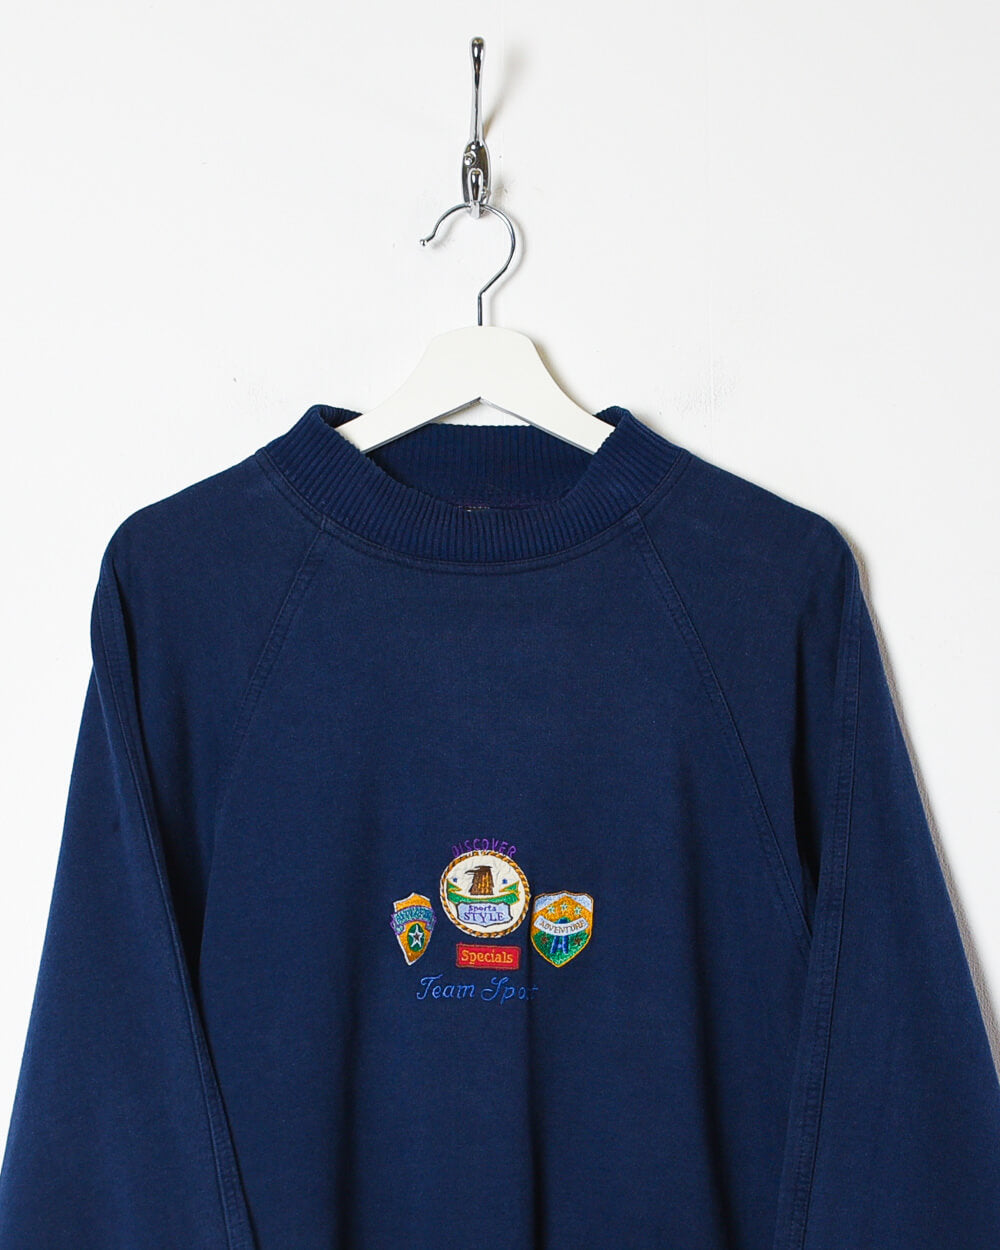 Navy Vintage Team Sport Mock Neck Sweatshirt -Large